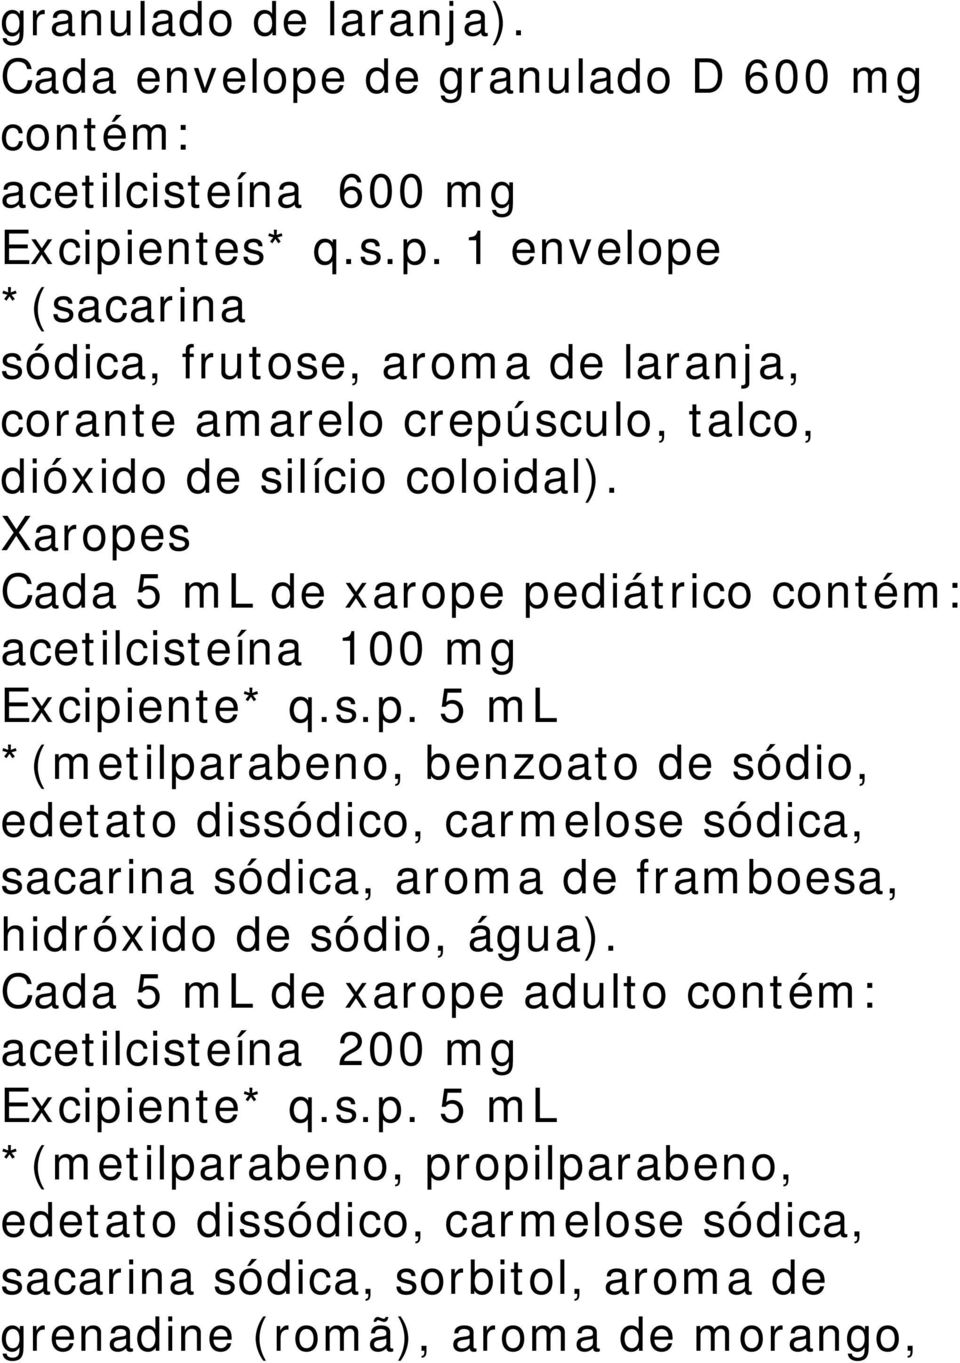 Cada 5 ml de xarope adulto contém: acetilcisteína 200 mg Excipiente* q.s.p. 5 ml *(metilparabeno, propilparabeno, edetato dissódico, carmelose sódica, sacarina sódica, sorbitol, aroma de grenadine (romã), aroma de morango,